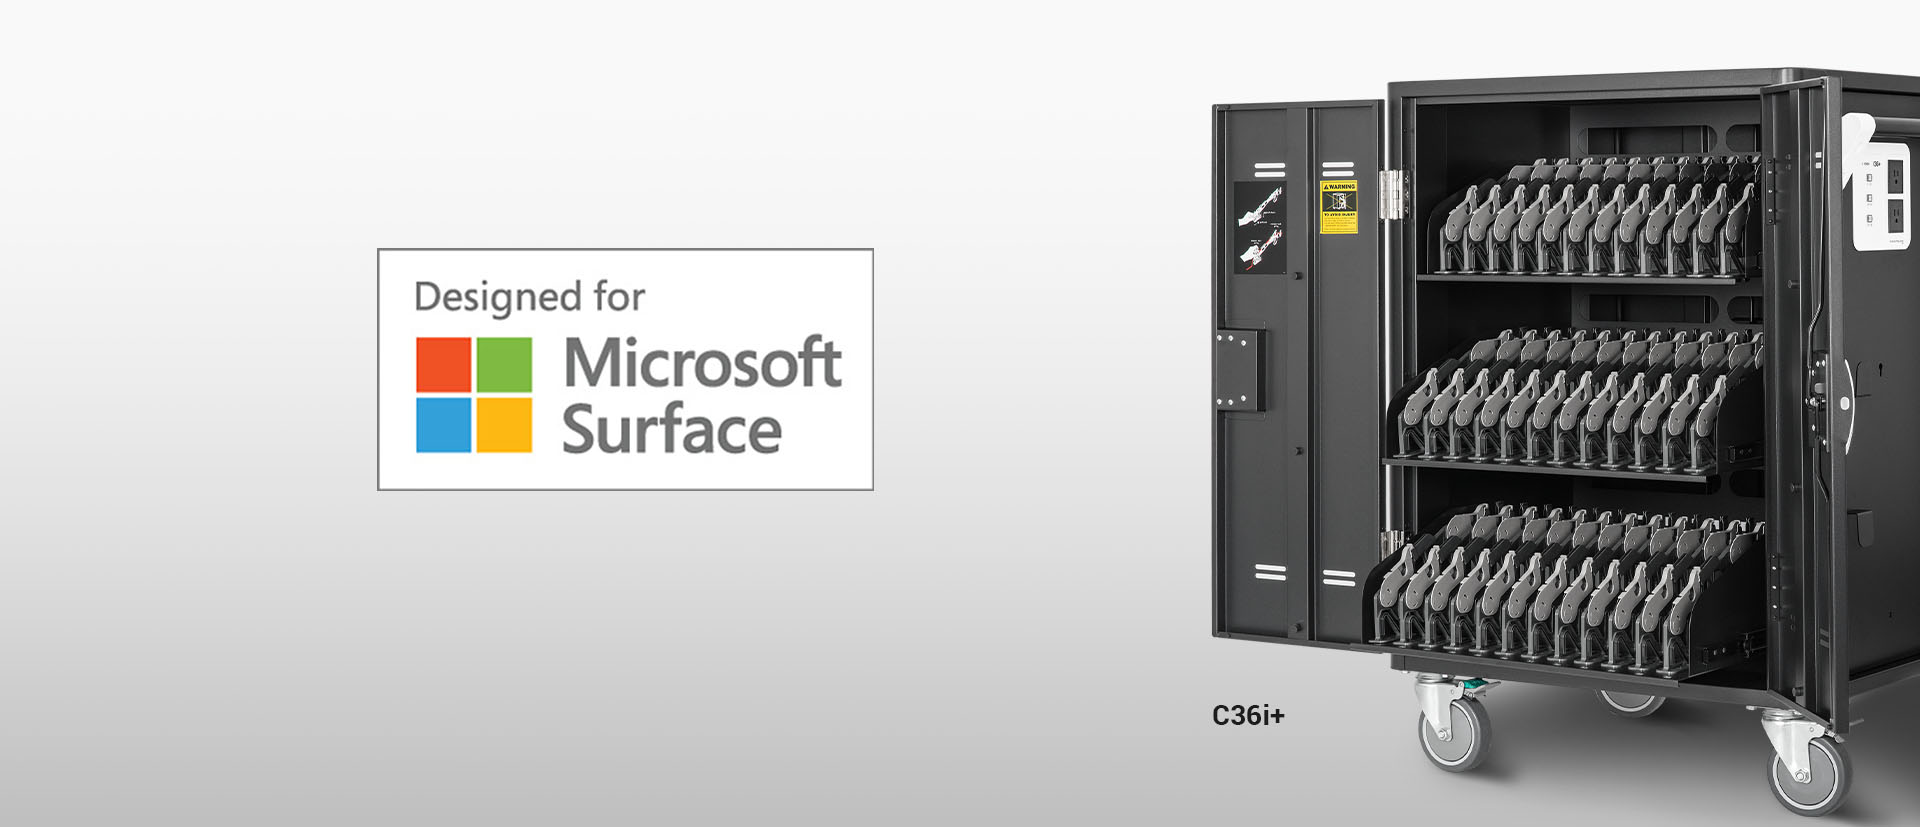 C36i+ Designed for Microsoft Surface